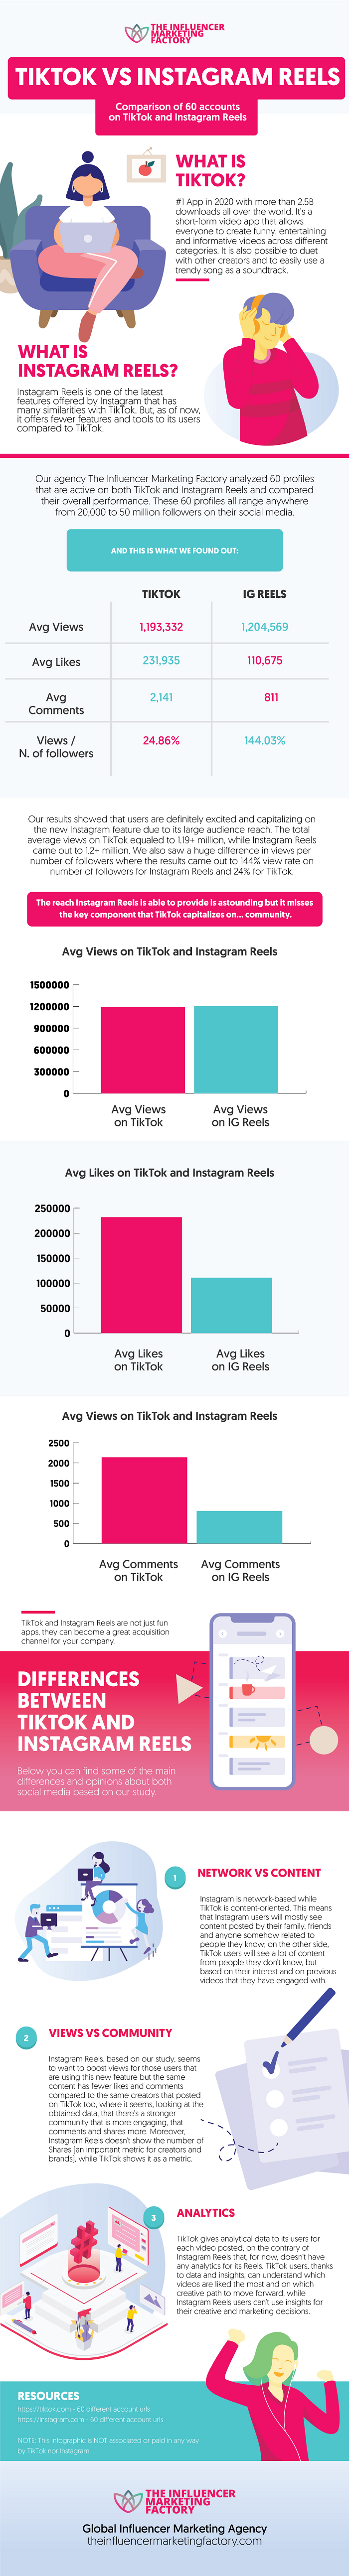 tiktok vs instagram reels infographic